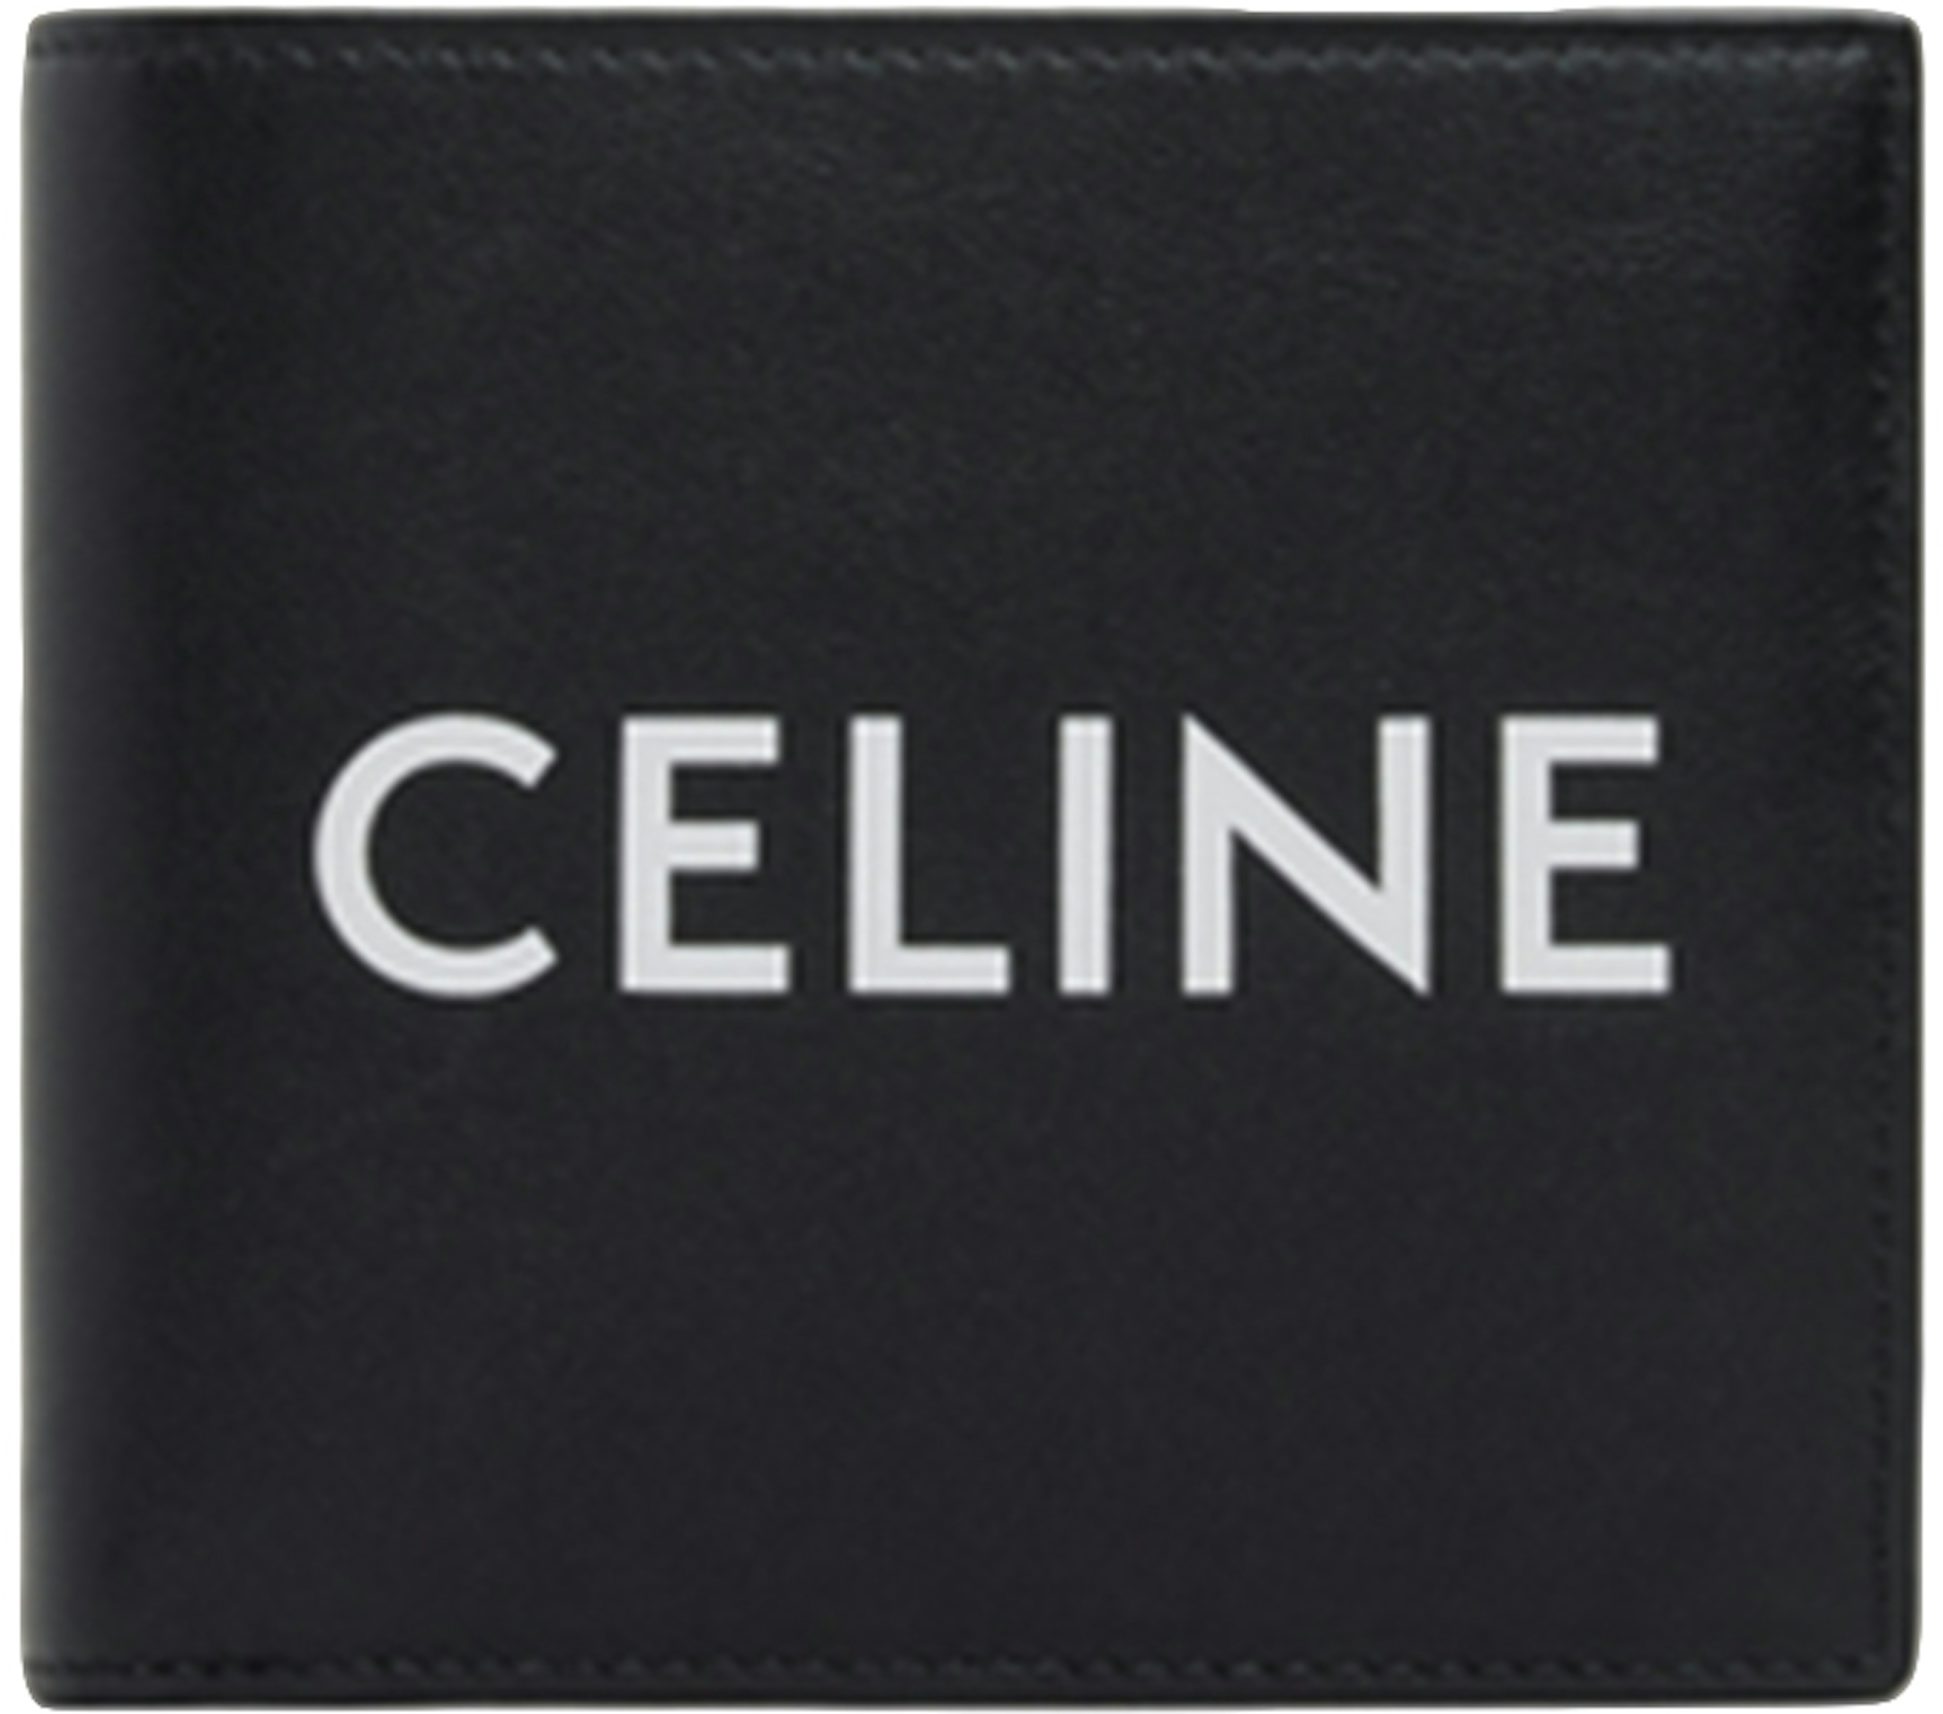 Celine Bifold Celine Print Wallet (4 Slot 2 Note Pockets 2 Flat